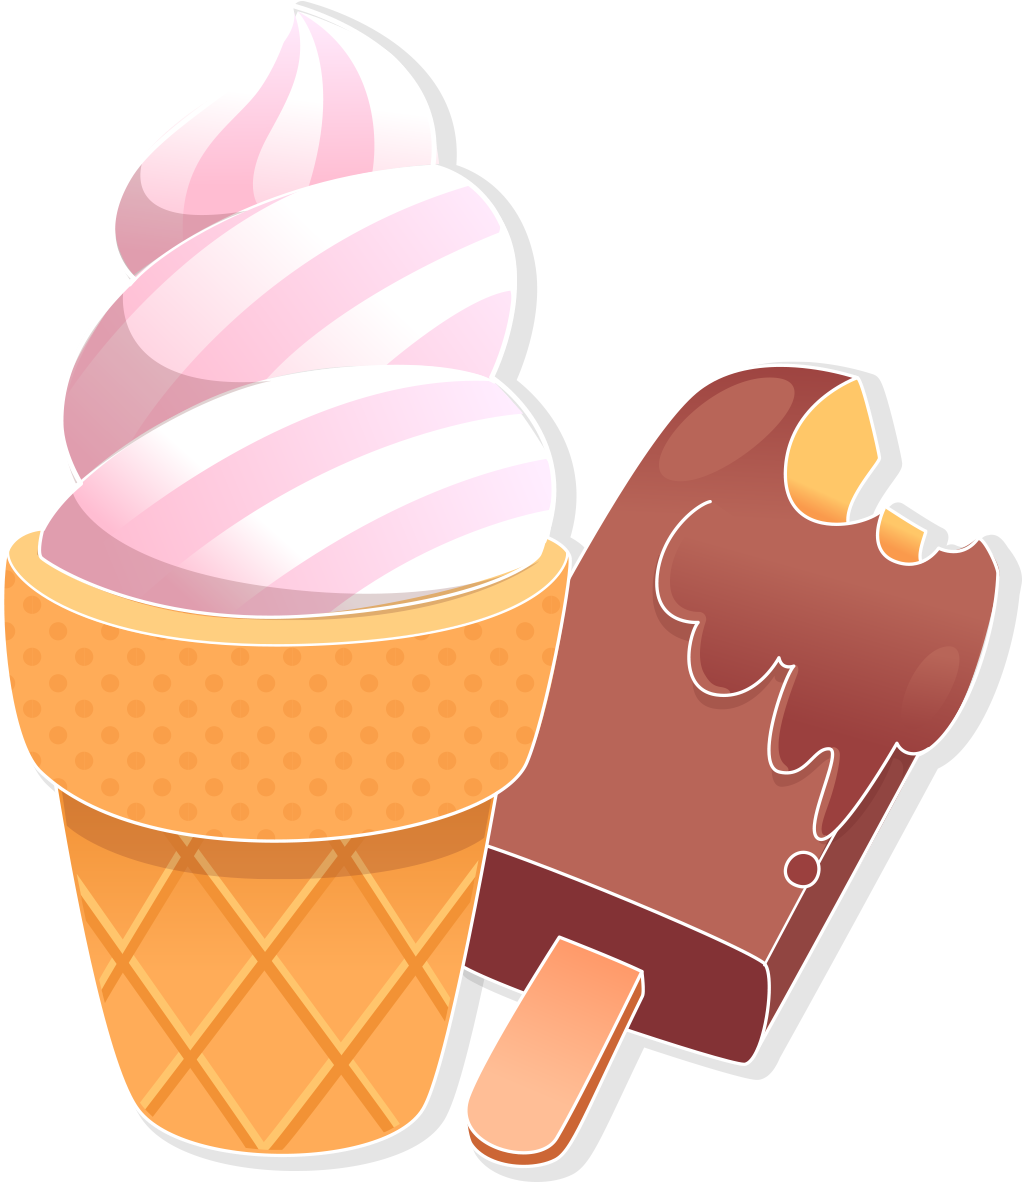 Neapolitan Ice Cream Gelato Ice Cream Cone Frozen Yogurt - Neapolitan Ice Cream Gelato Ice Cream Cone Frozen Yogurt (1181x1181)